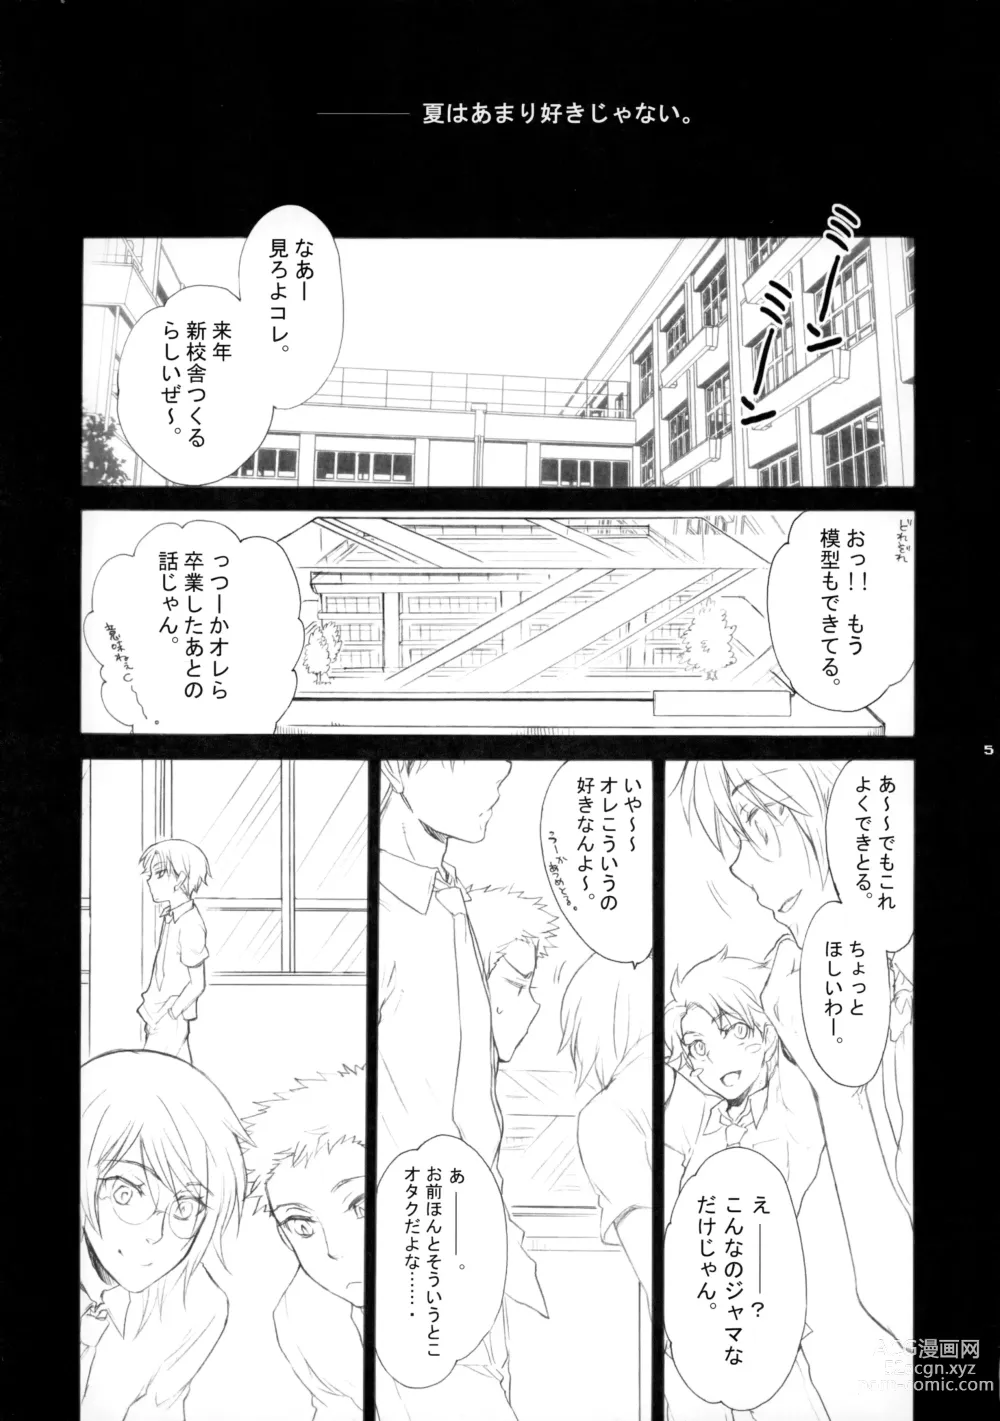 Page 4 of doujinshi 幻視画少年